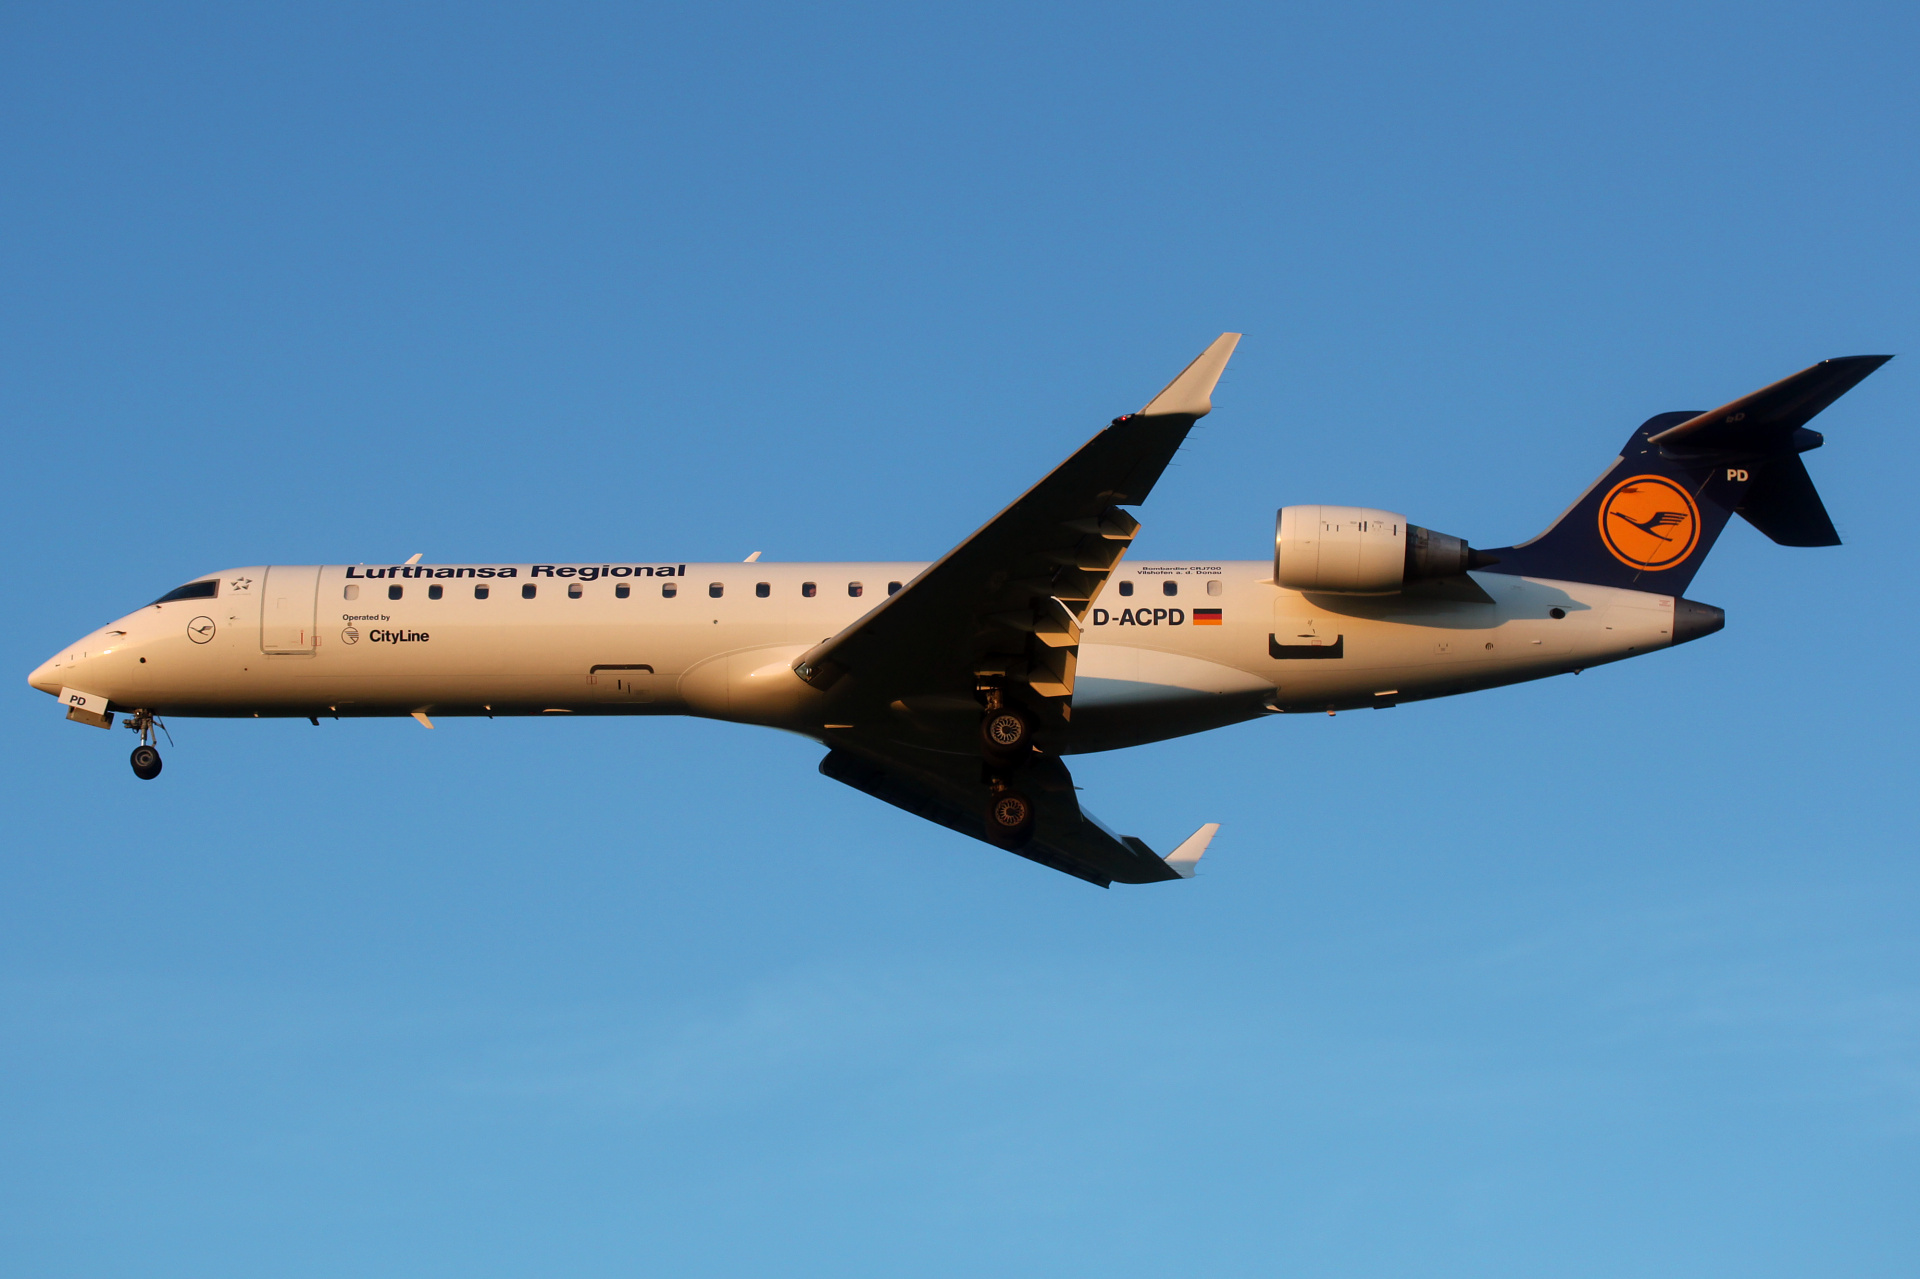 D-ACPD, Lufthansa Regional (CityLine) (Aircraft » EPWA Spotting » Mitsubishi Regional Jet » CRJ-700)